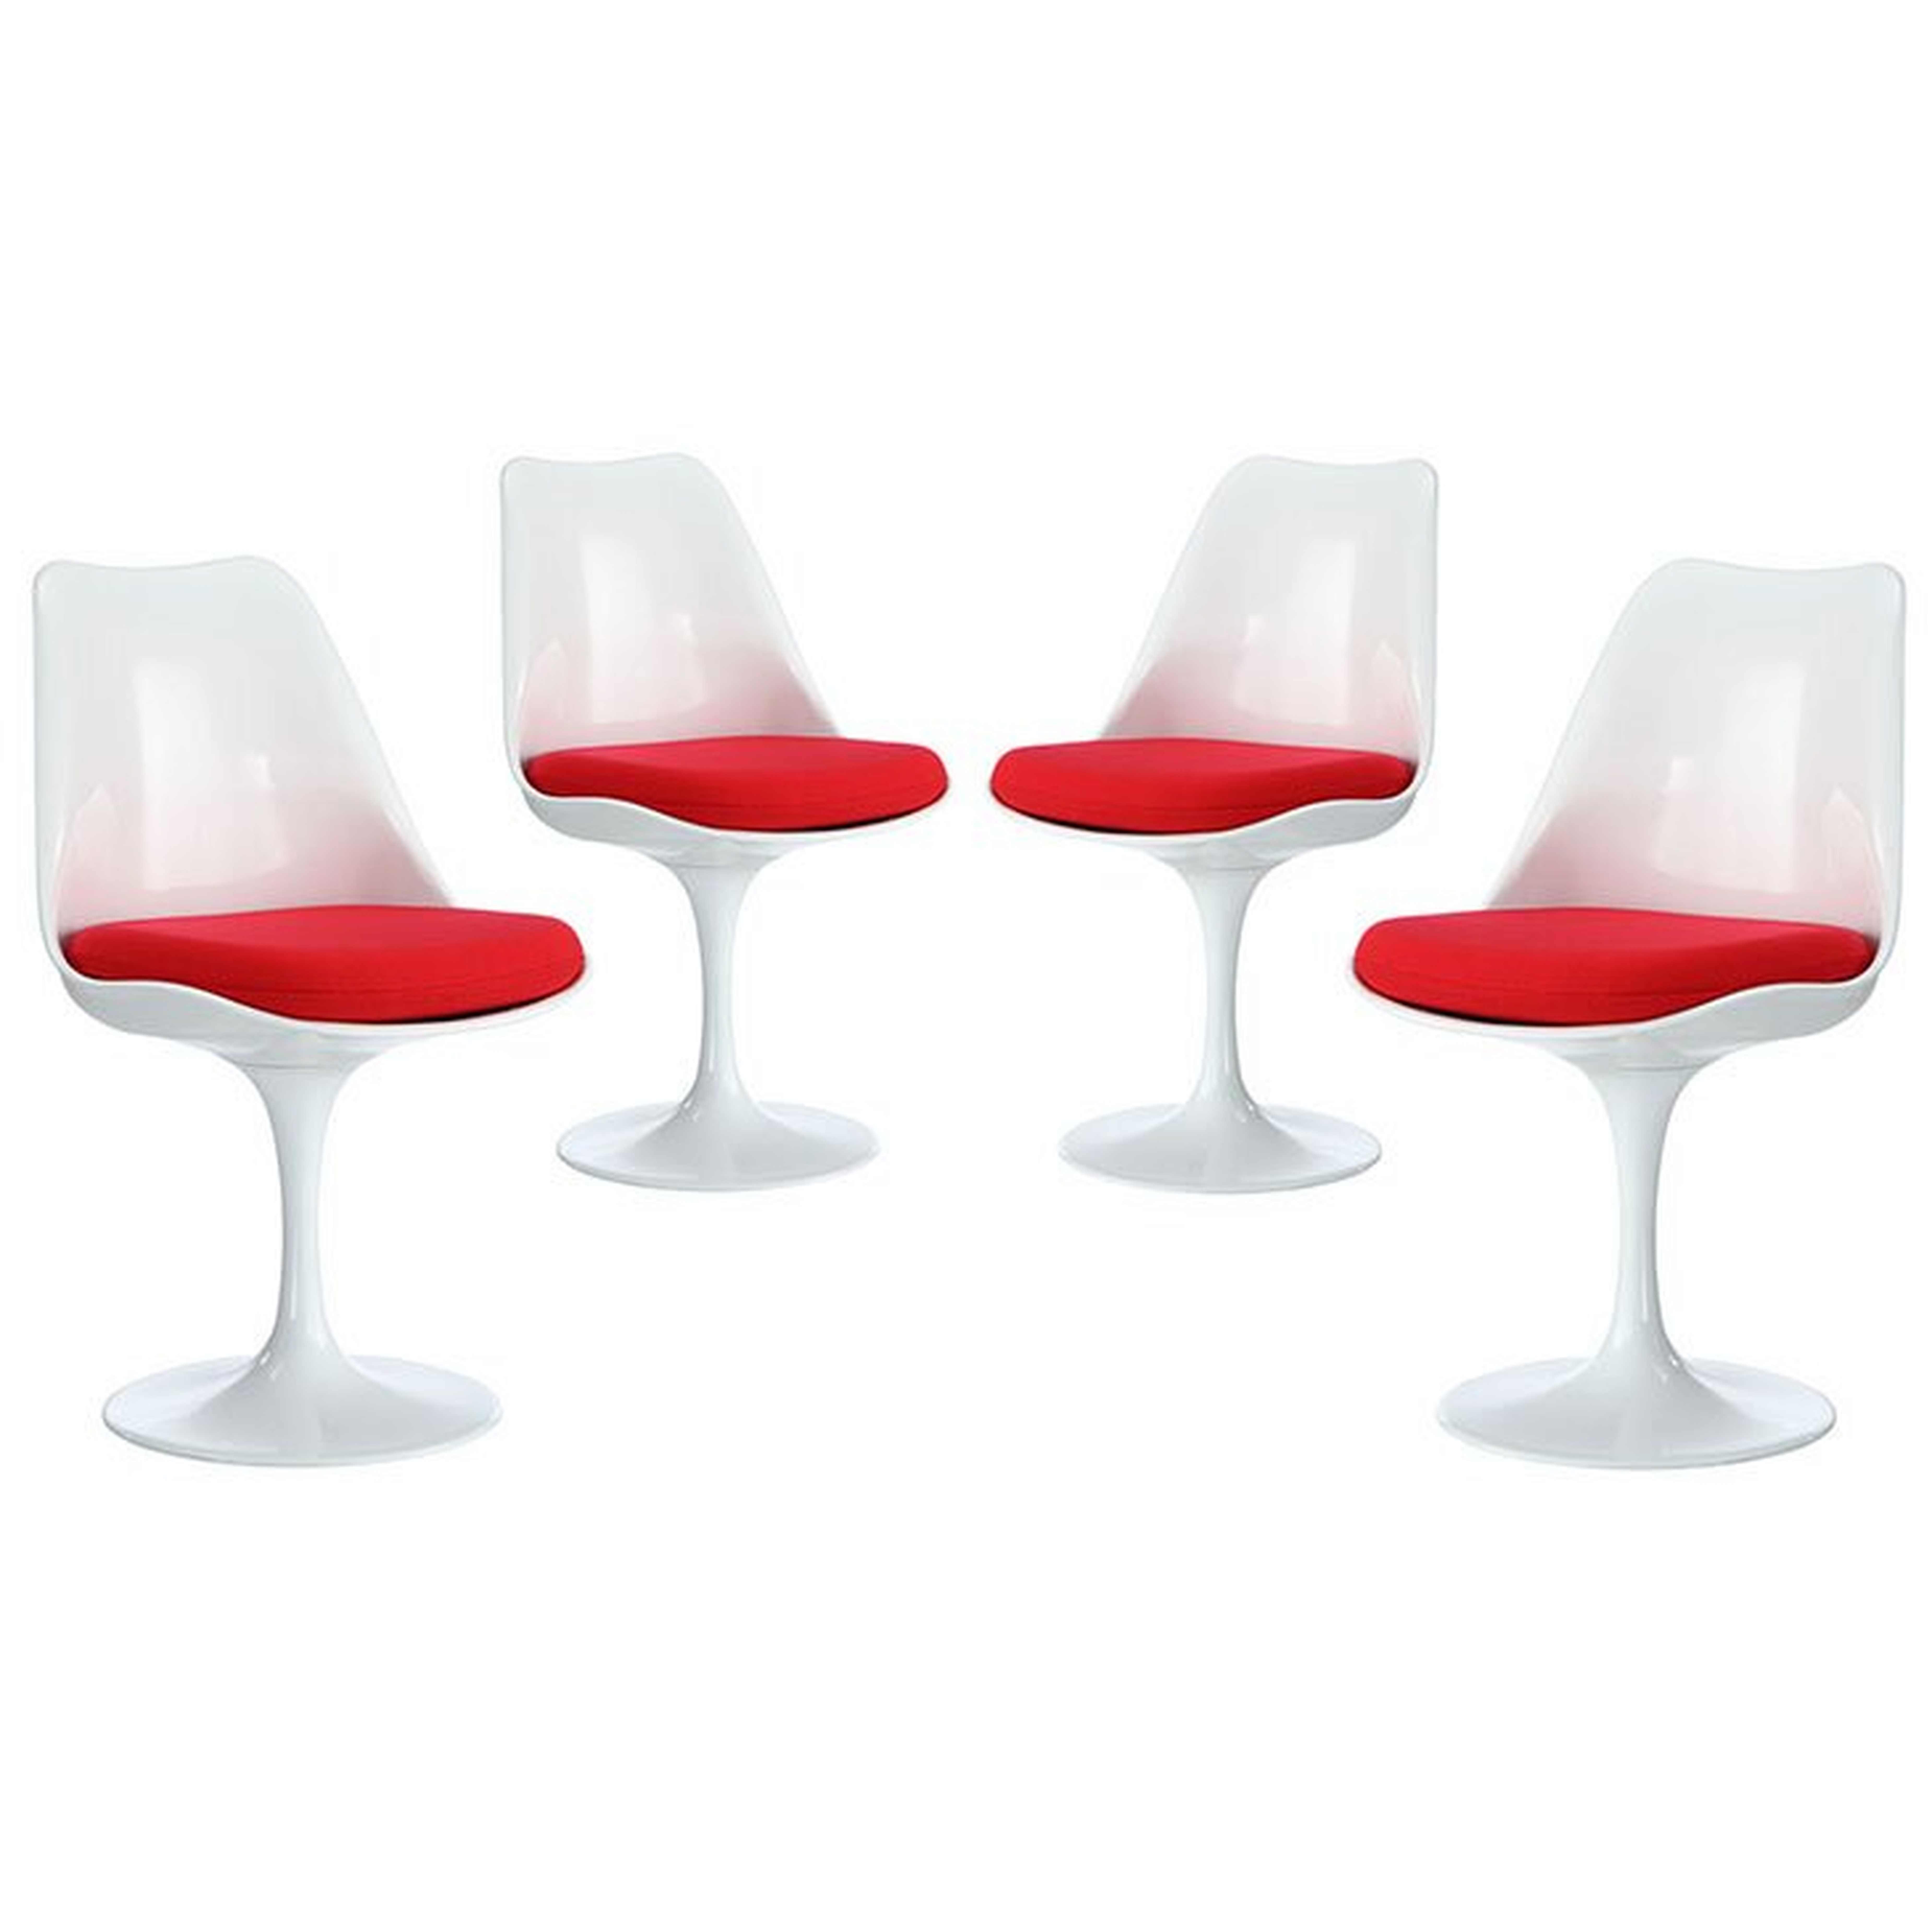 Julien Upholstered Side Chair in White (Set of 4) - Wayfair